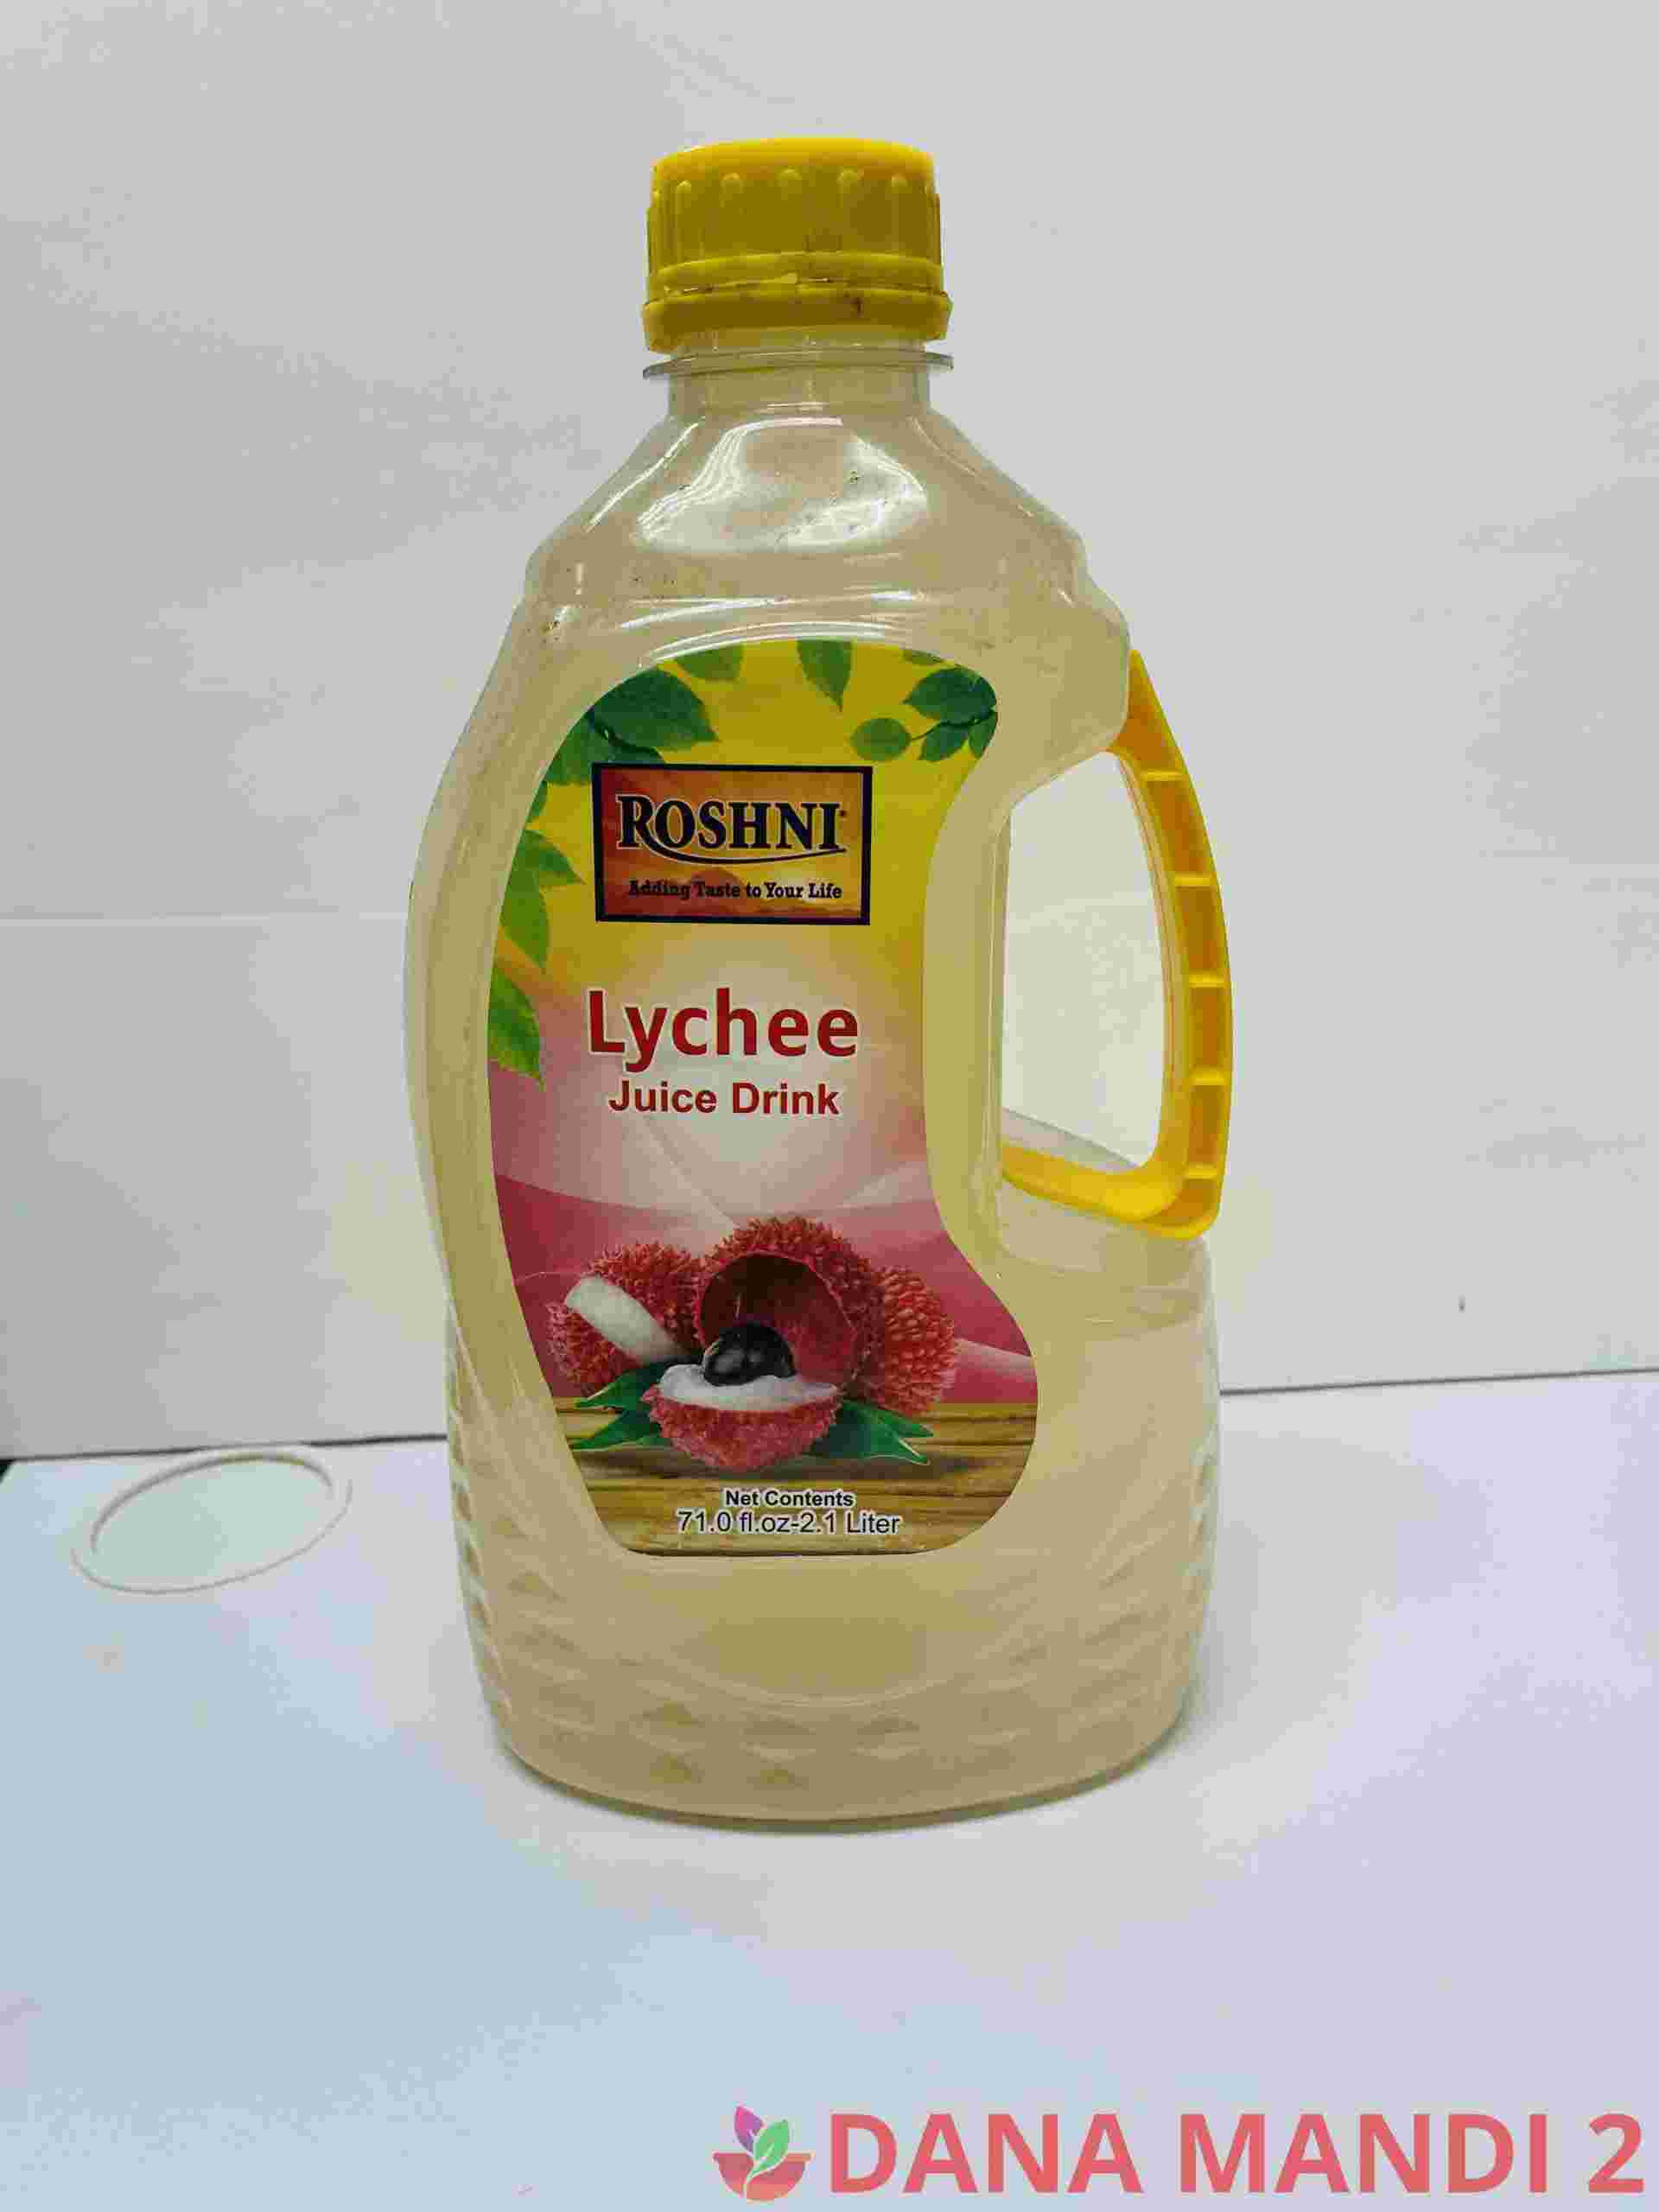 Roshani Lychee Juice Drink